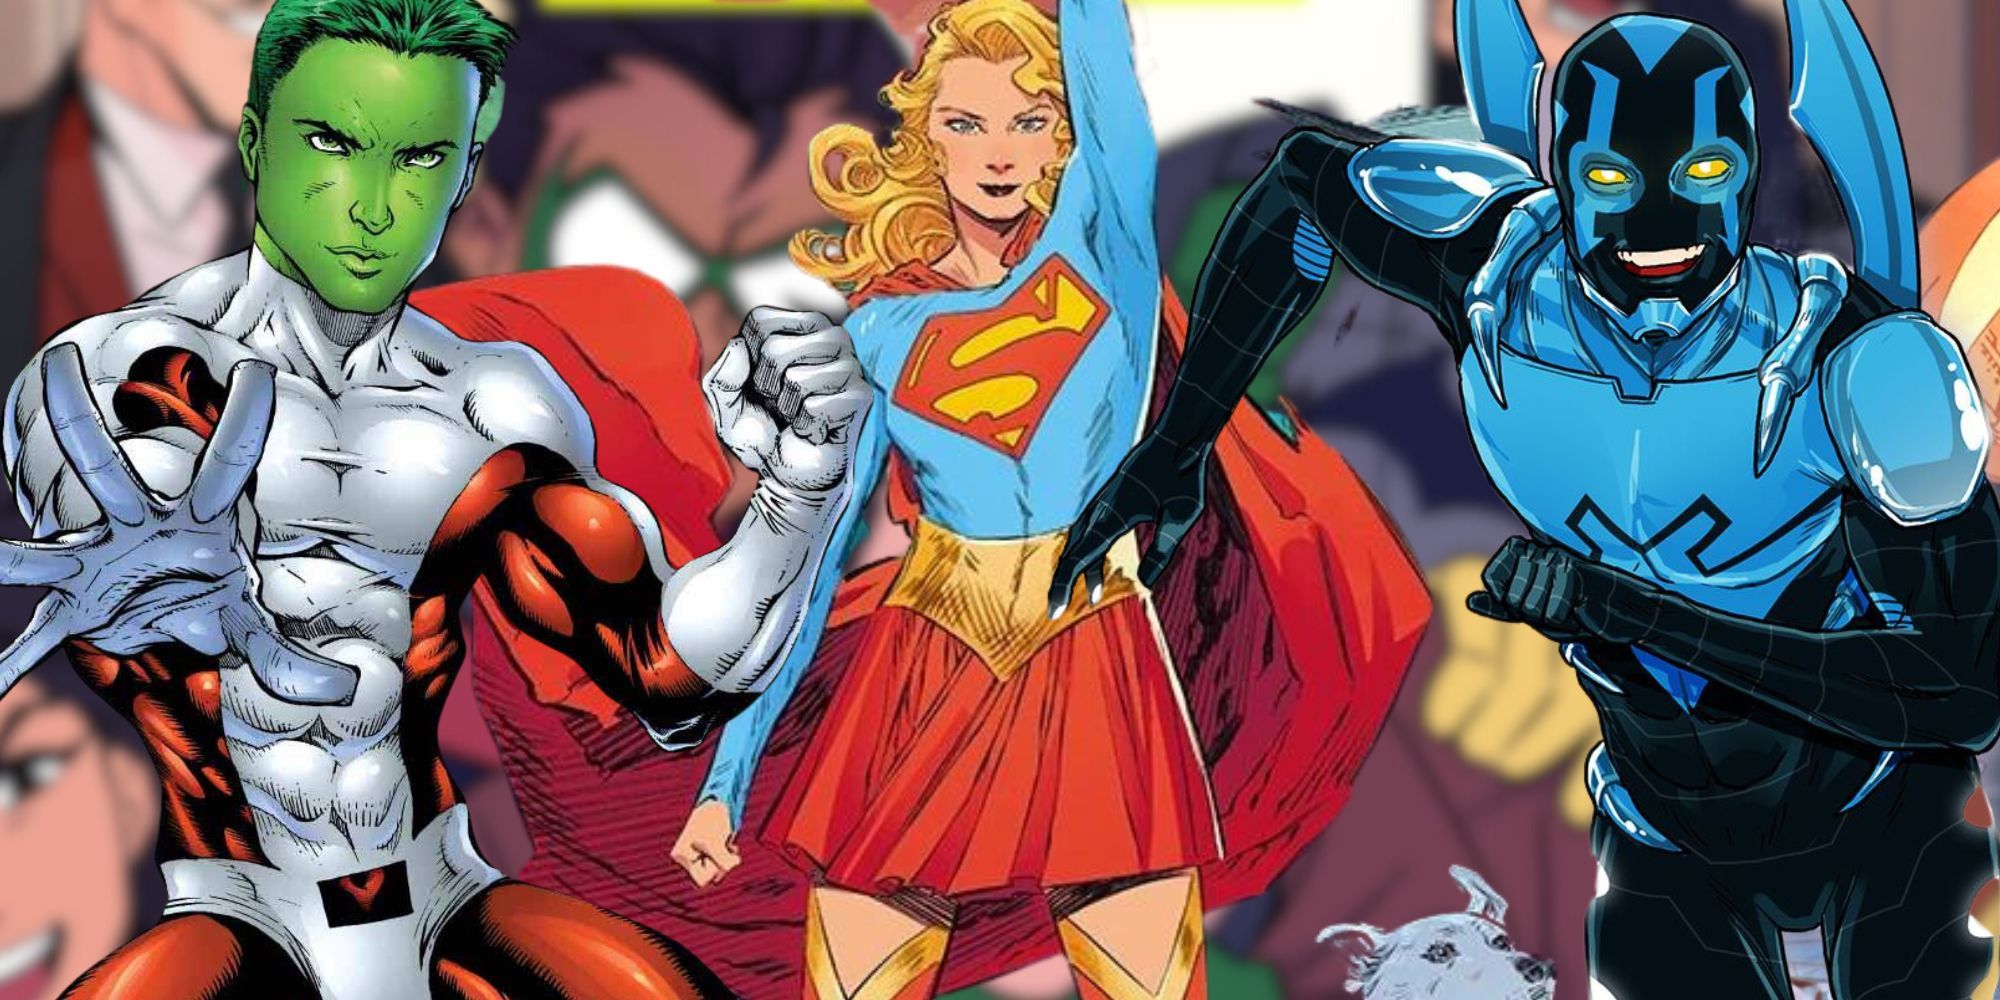 wonder woman's trinity backups prove we need more slice-of-life superhero stories